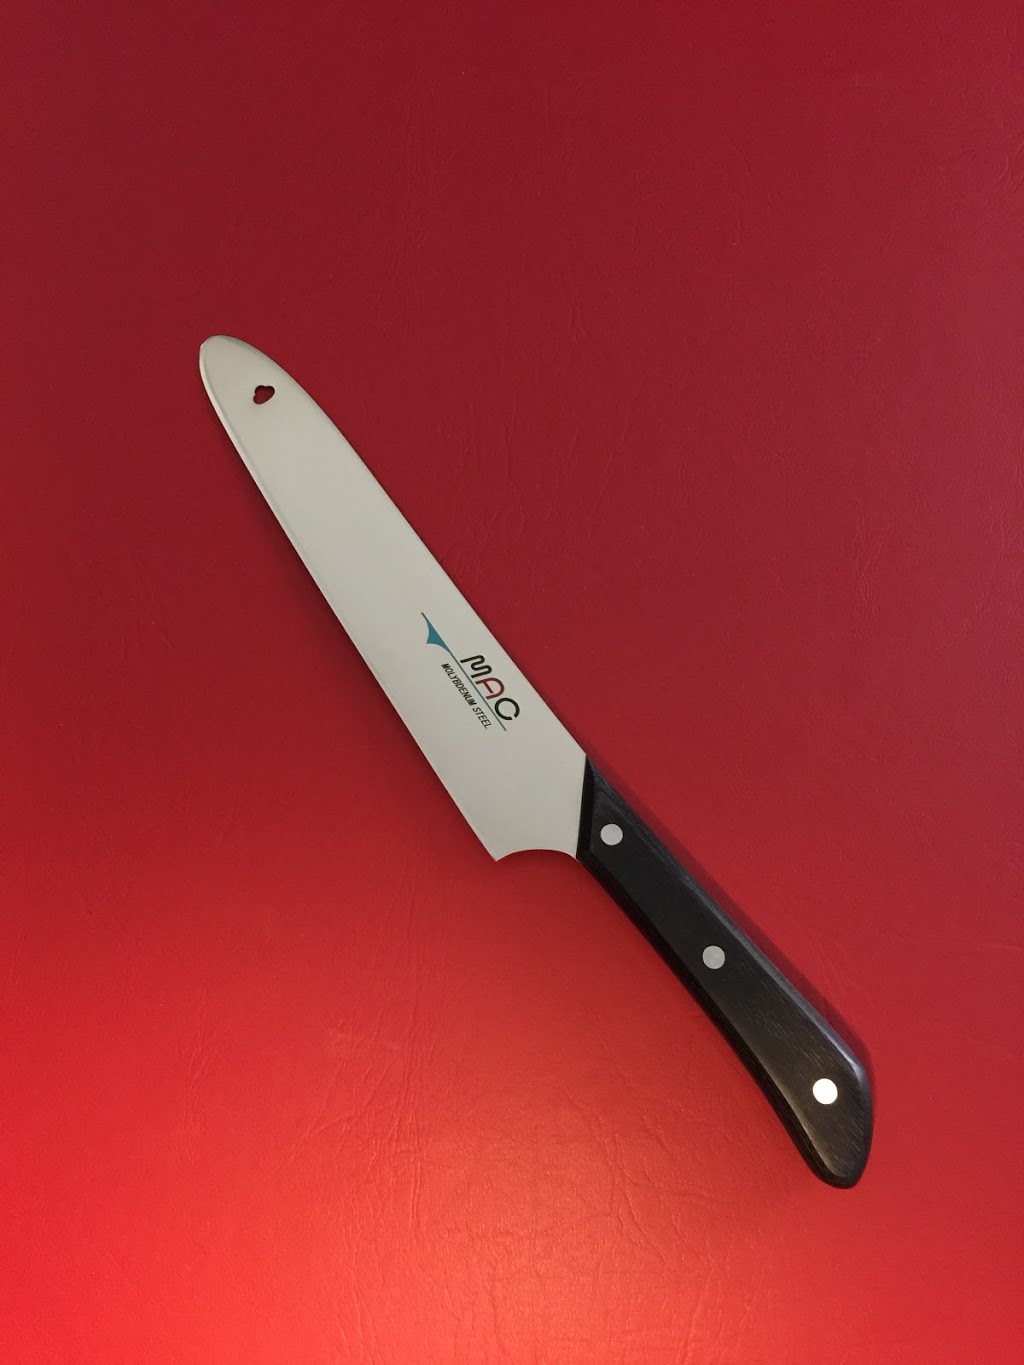 Ogg Sharpening & Knife Store, Gift Shop Selling Fine Knives Aust | 248 Upper Dawson Rd, Allenstown QLD 4700, Australia | Phone: 0427 343 197